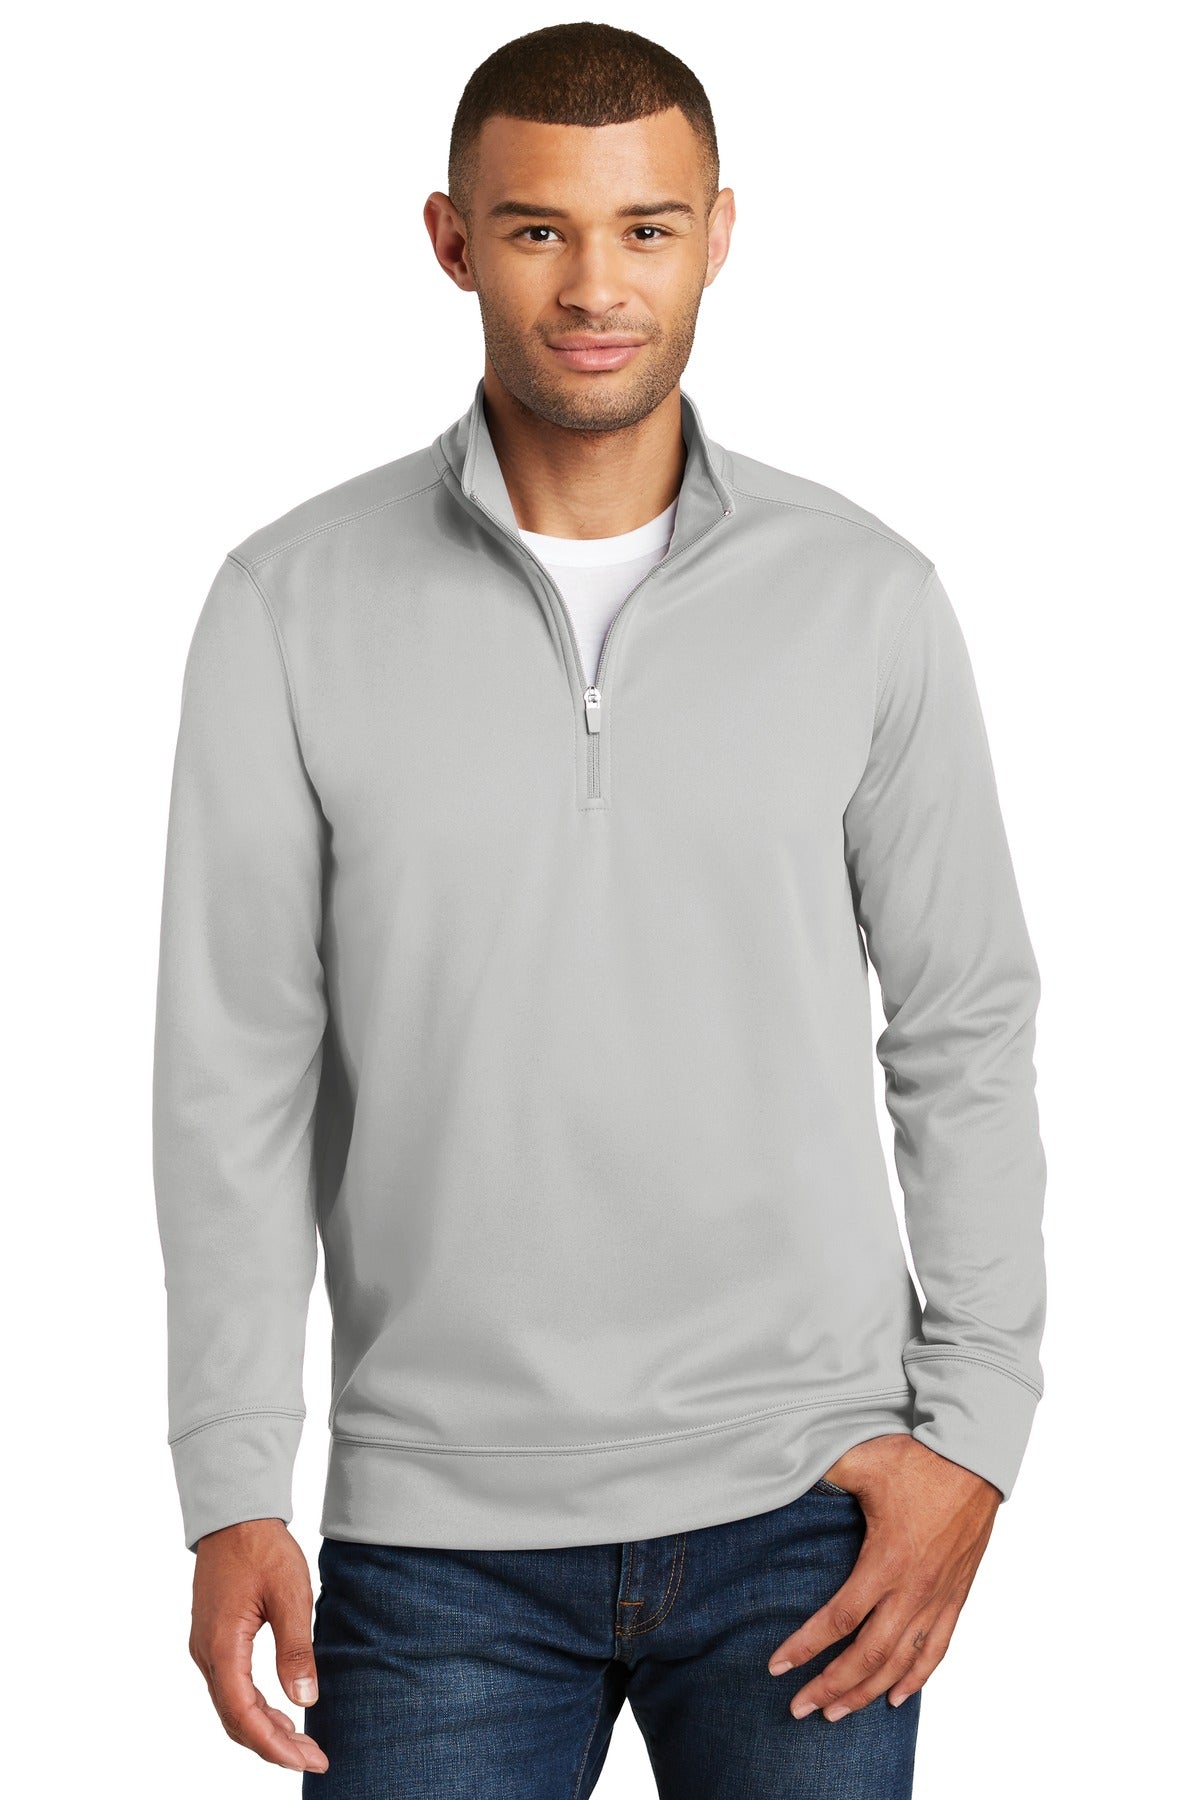 Performance Fleece 1/4-Zip Pullover Sweatshirt with Embroidery PC590Q